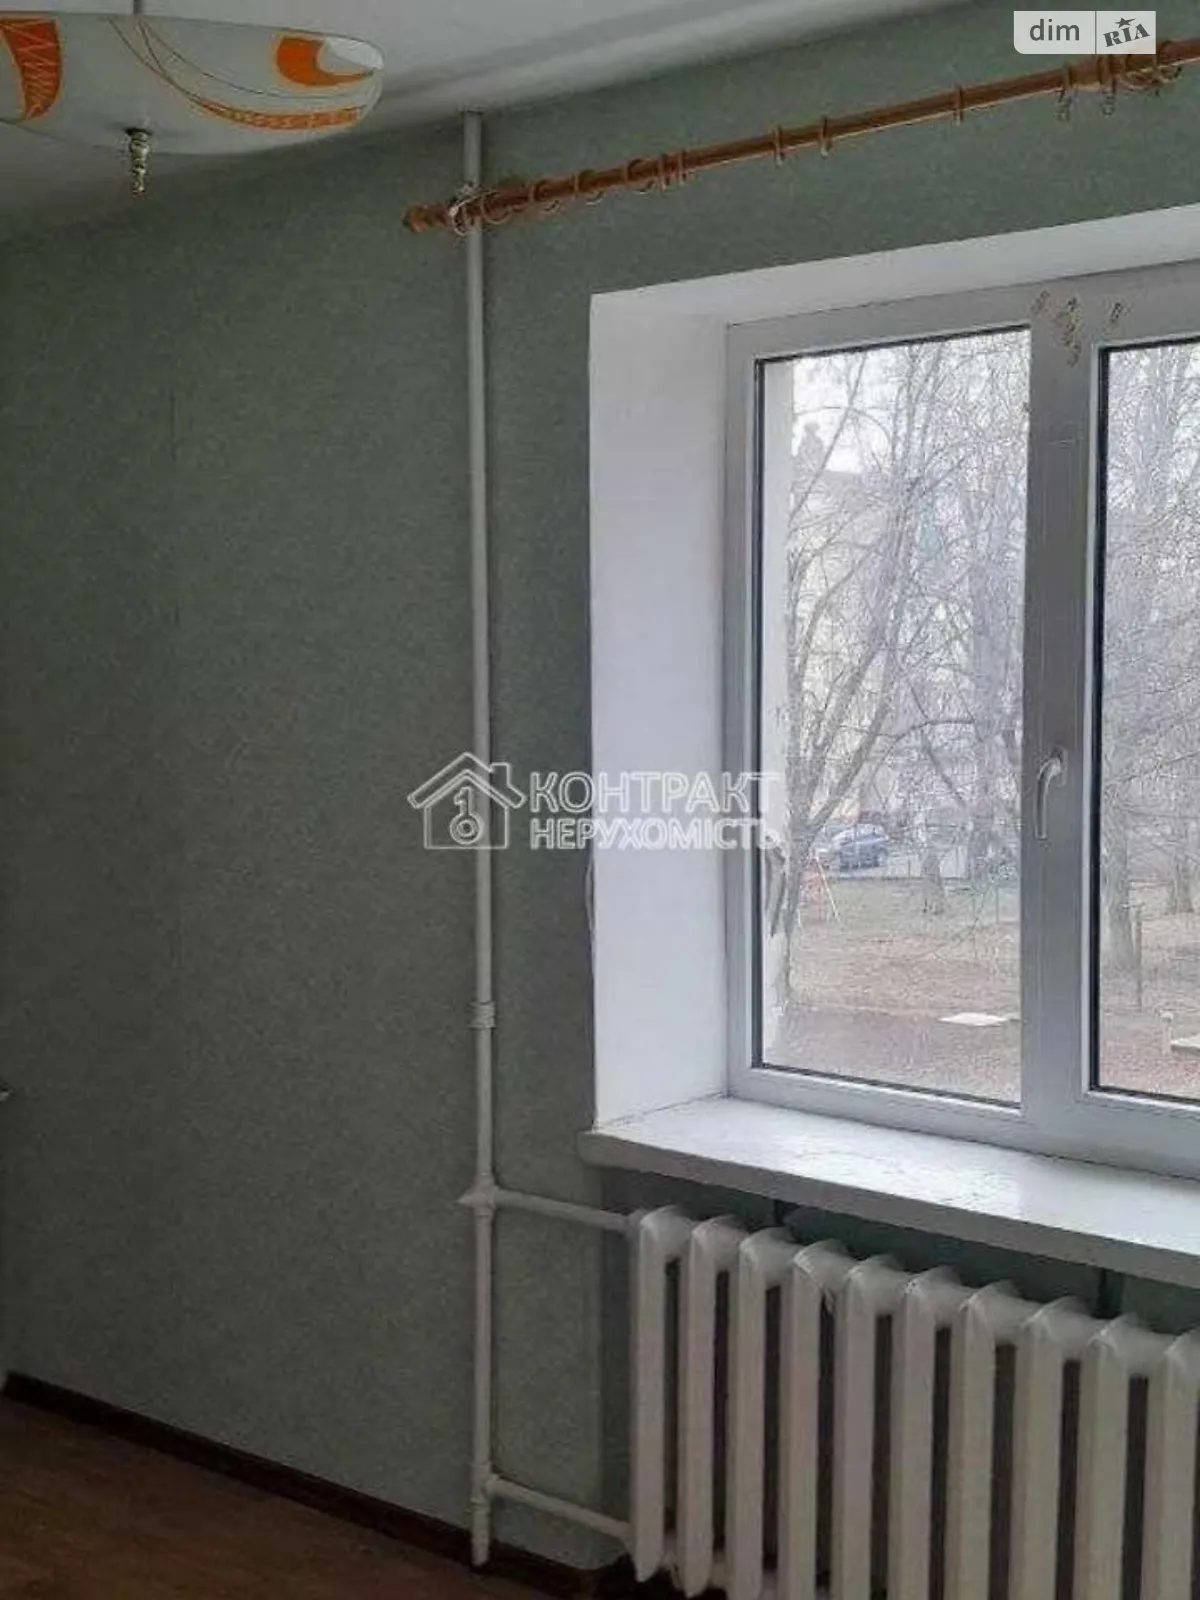 Сдается в аренду 2-комнатная квартира 45.8 кв. м в Харькове, ул. Косарева - фото 1